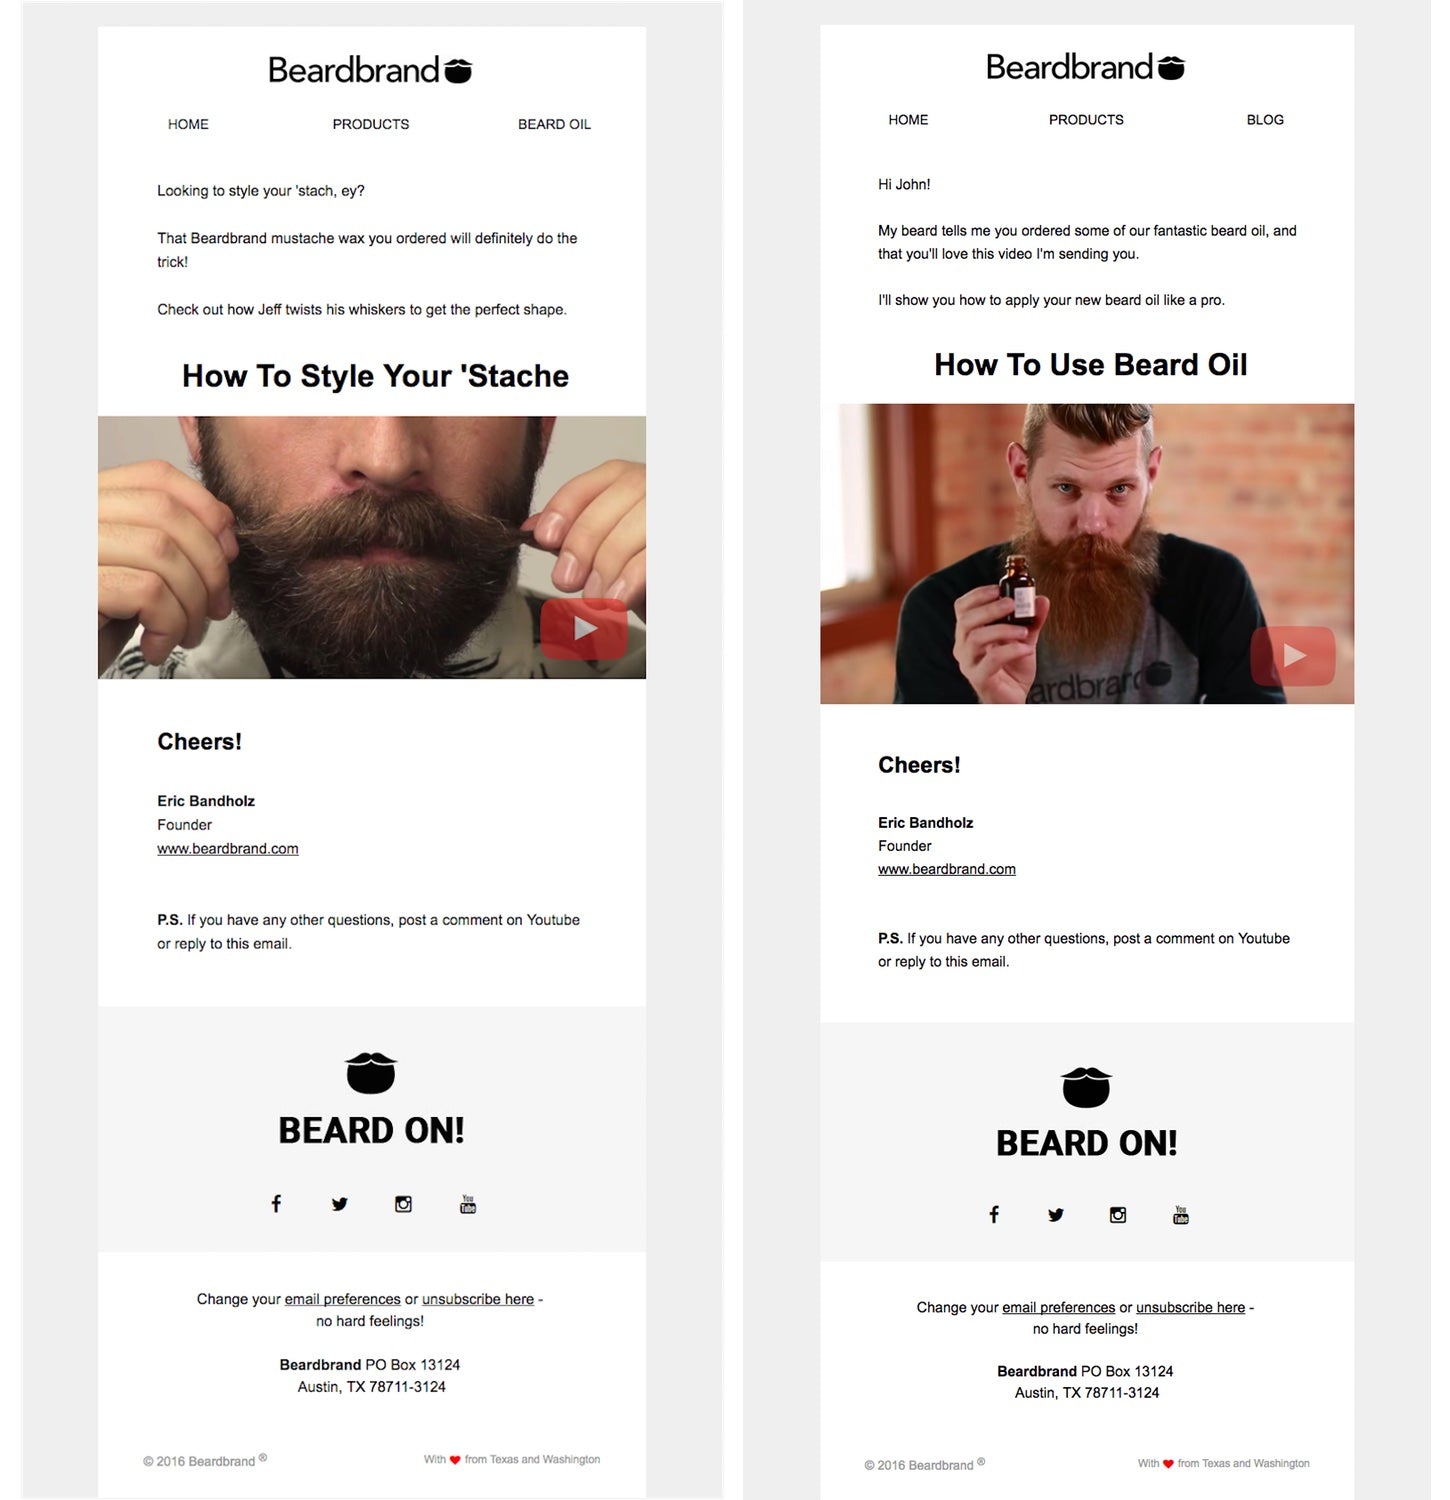 Successful Marketing Campaigns: Beardbrand